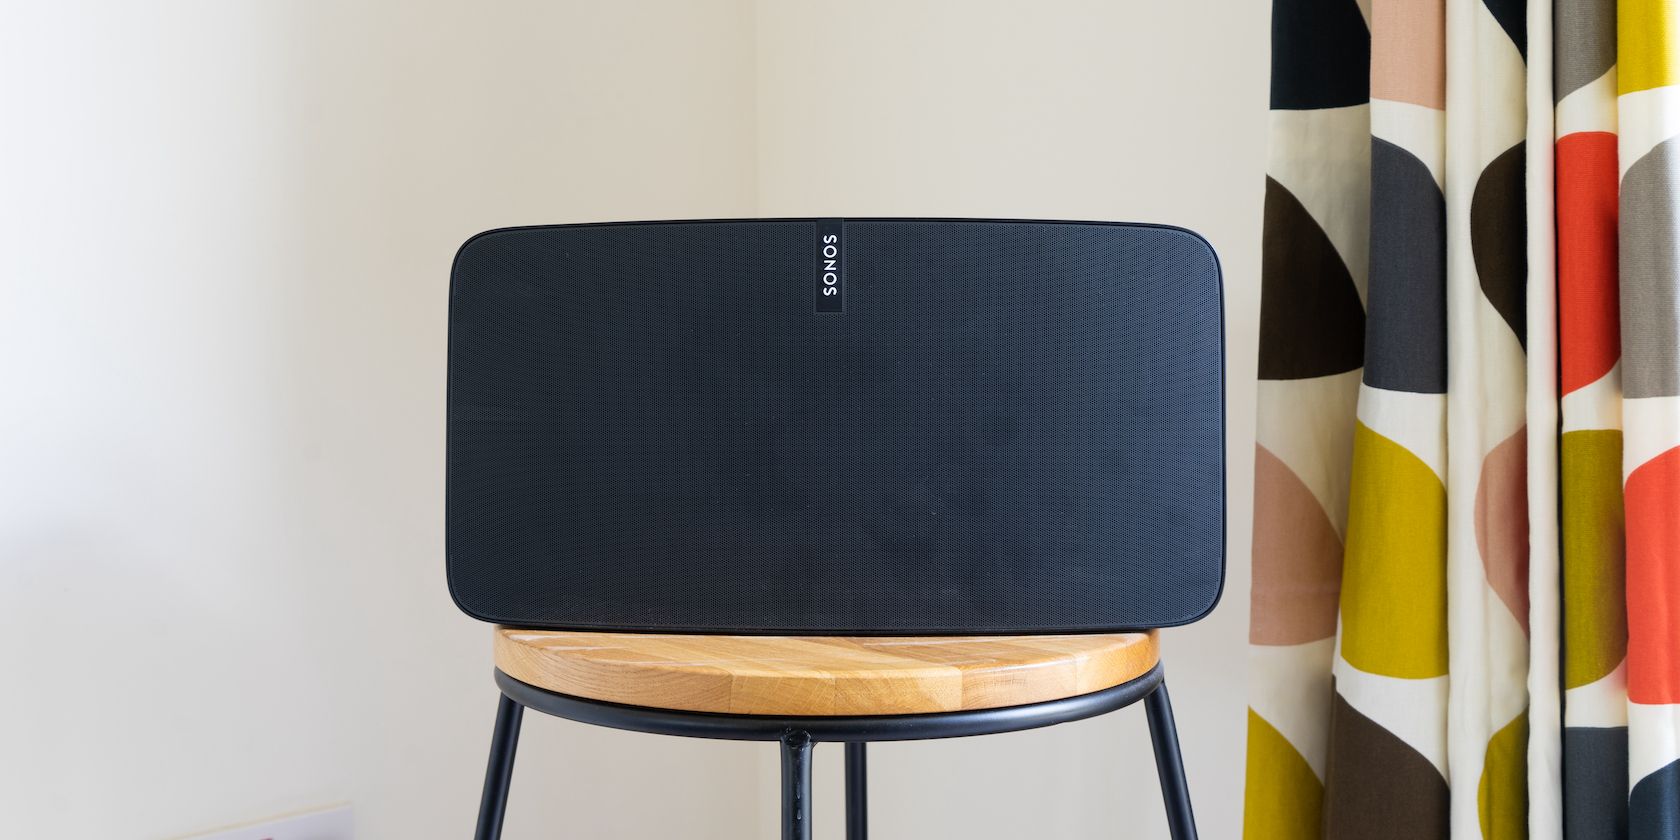 Sonos speaker on a stool